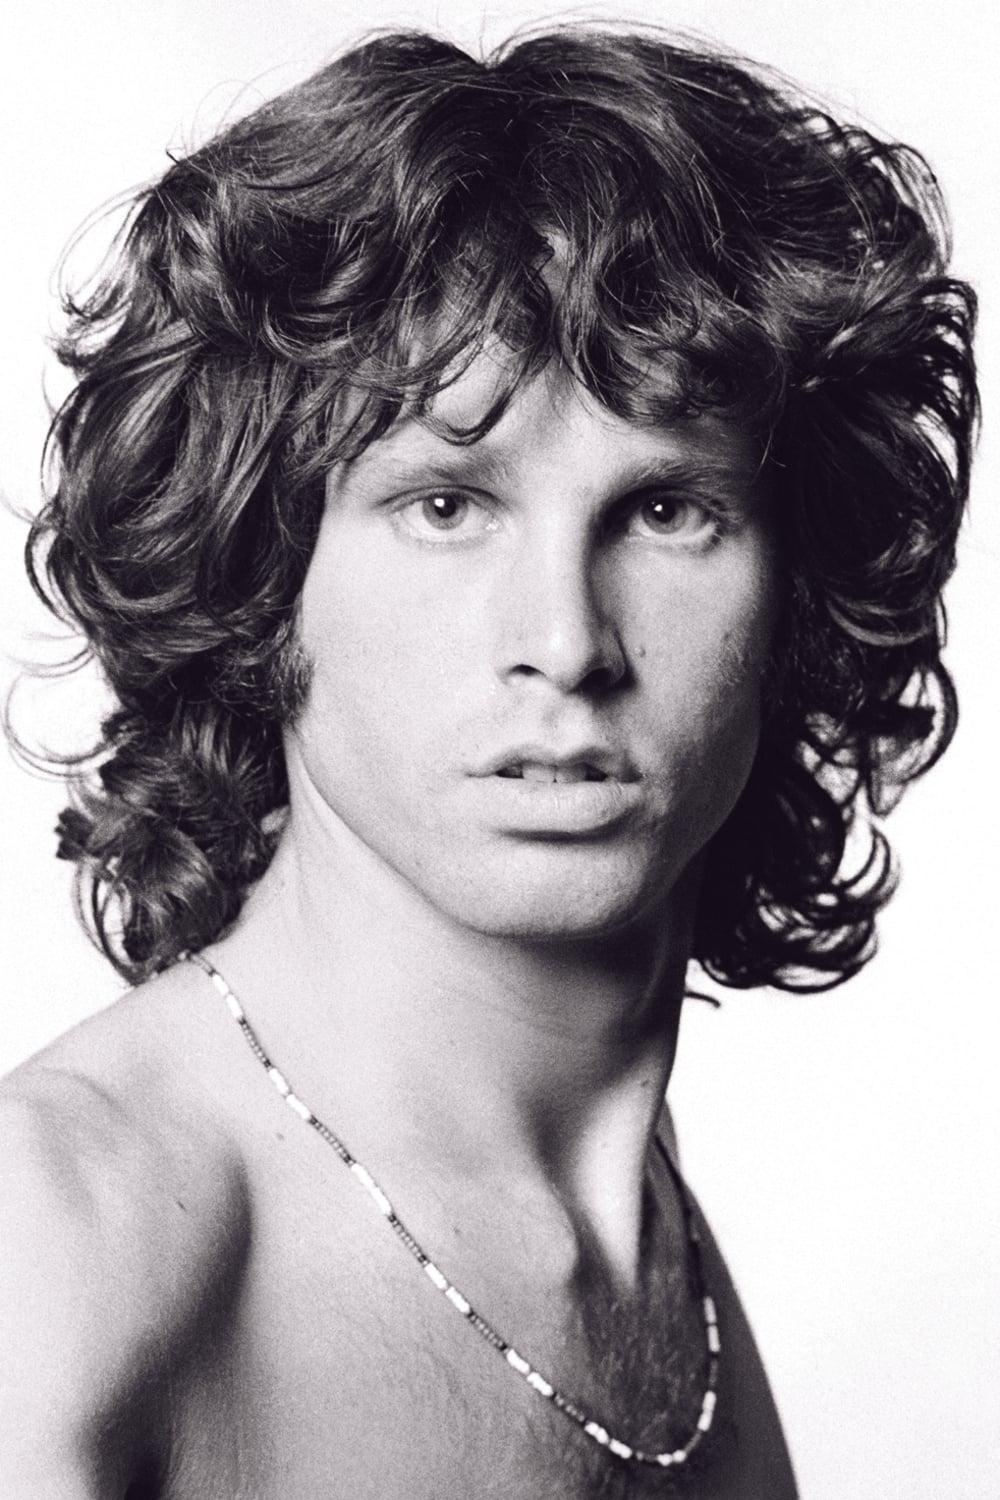 Jim Morrison | Self - The Doors Vocalist (archive footage)